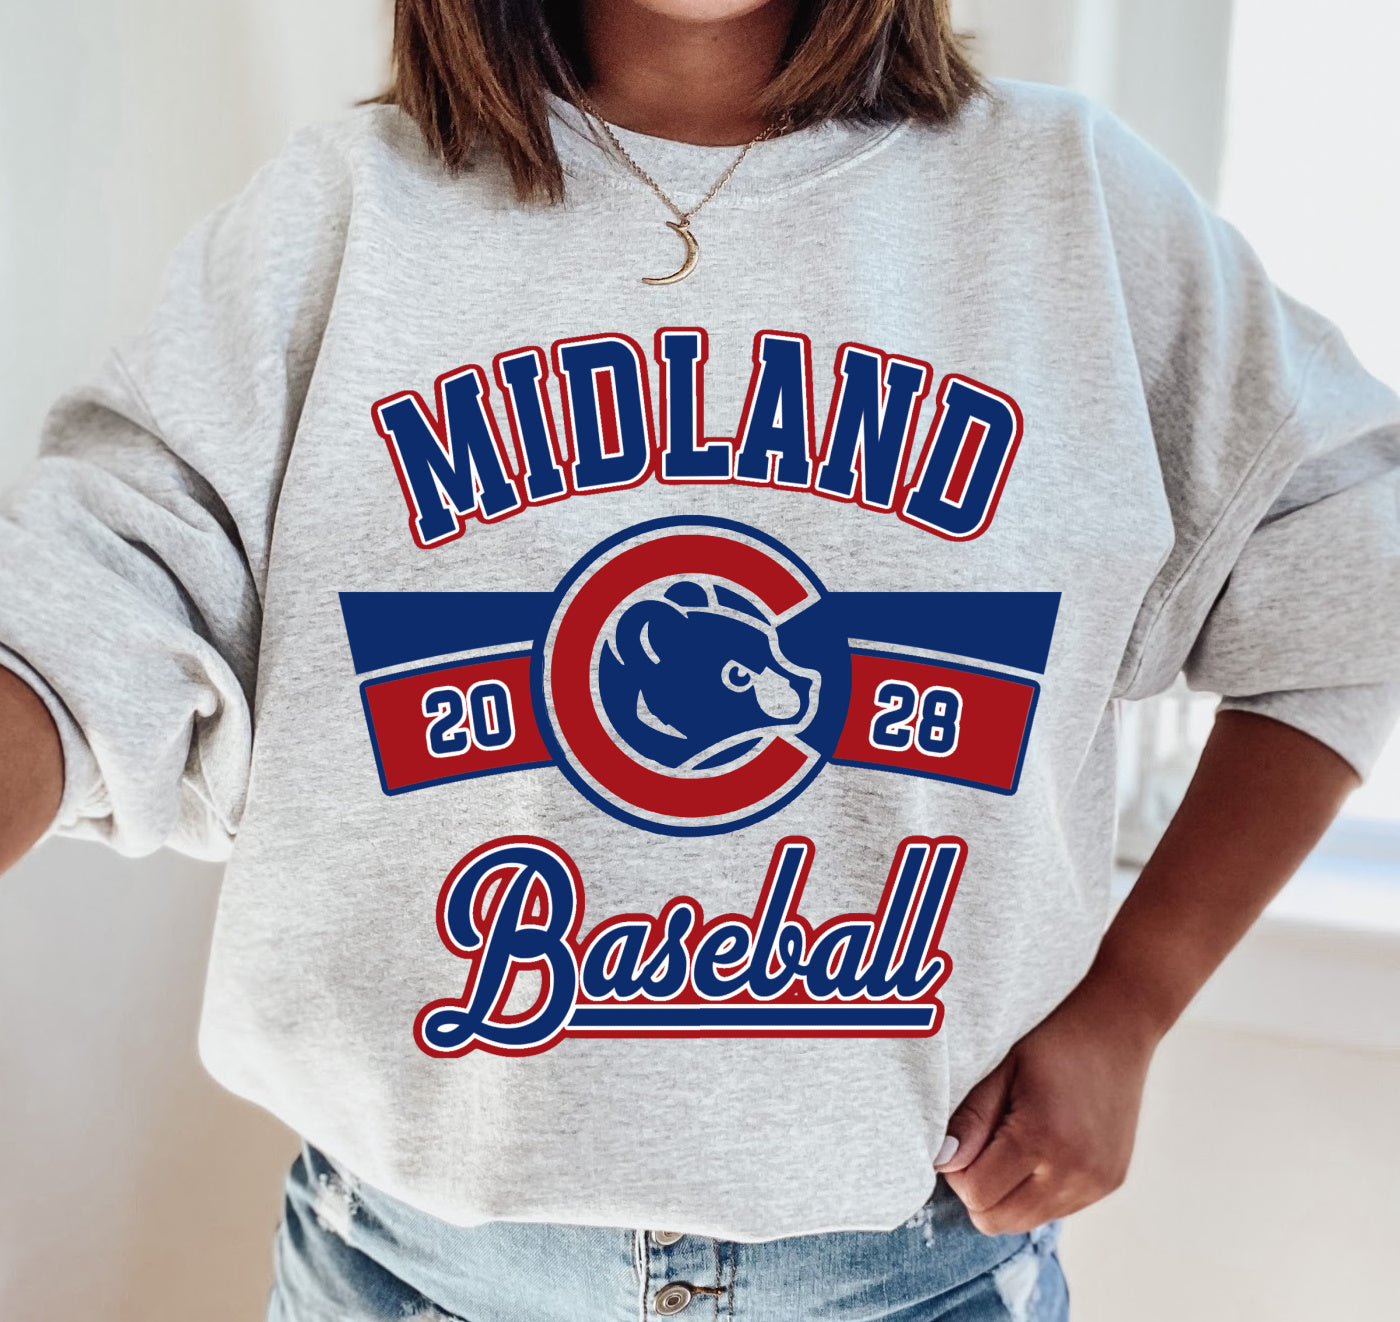 Midland Cubs Sweatshirt / Gildan or Bella Canvas Brand